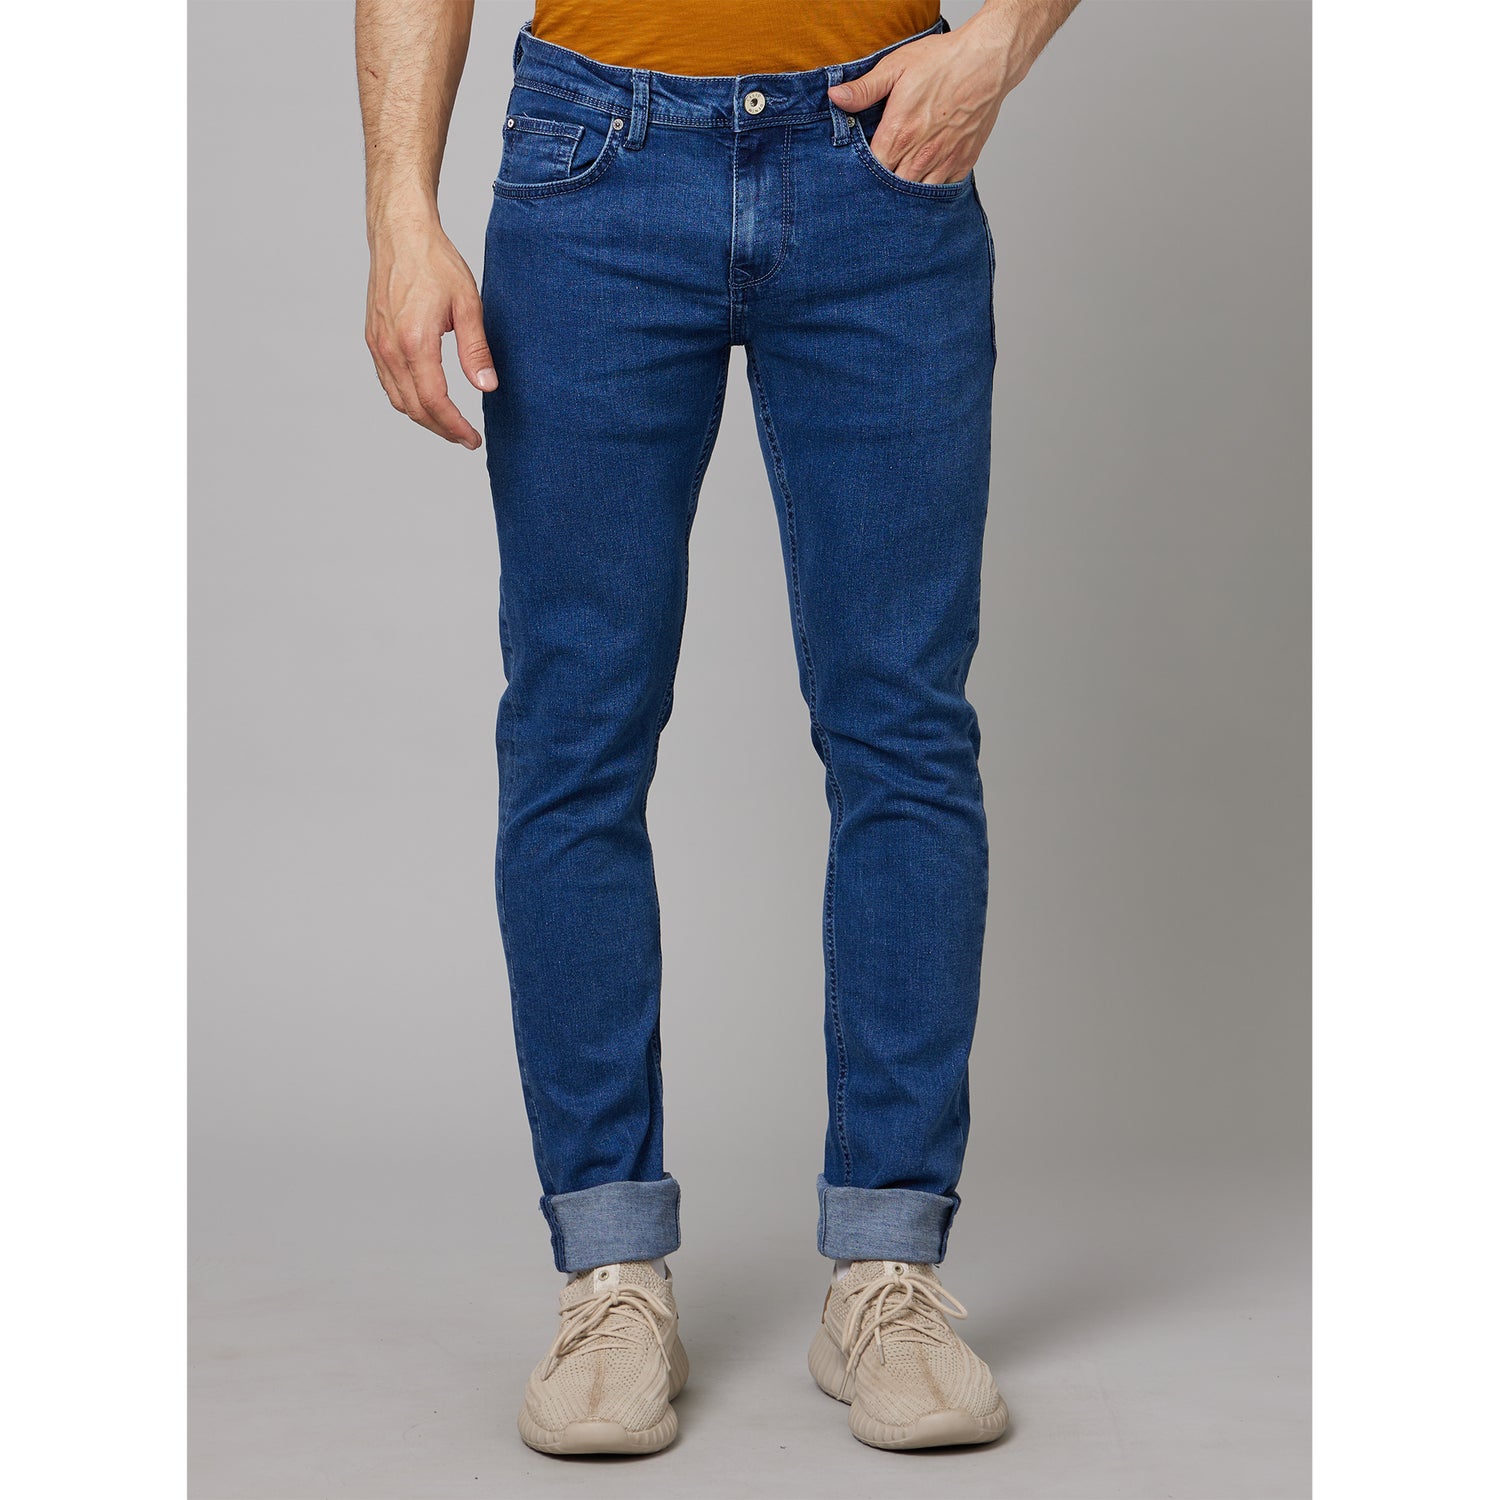 Navy Blue Stretchable Jeans (COECOSTONE125)